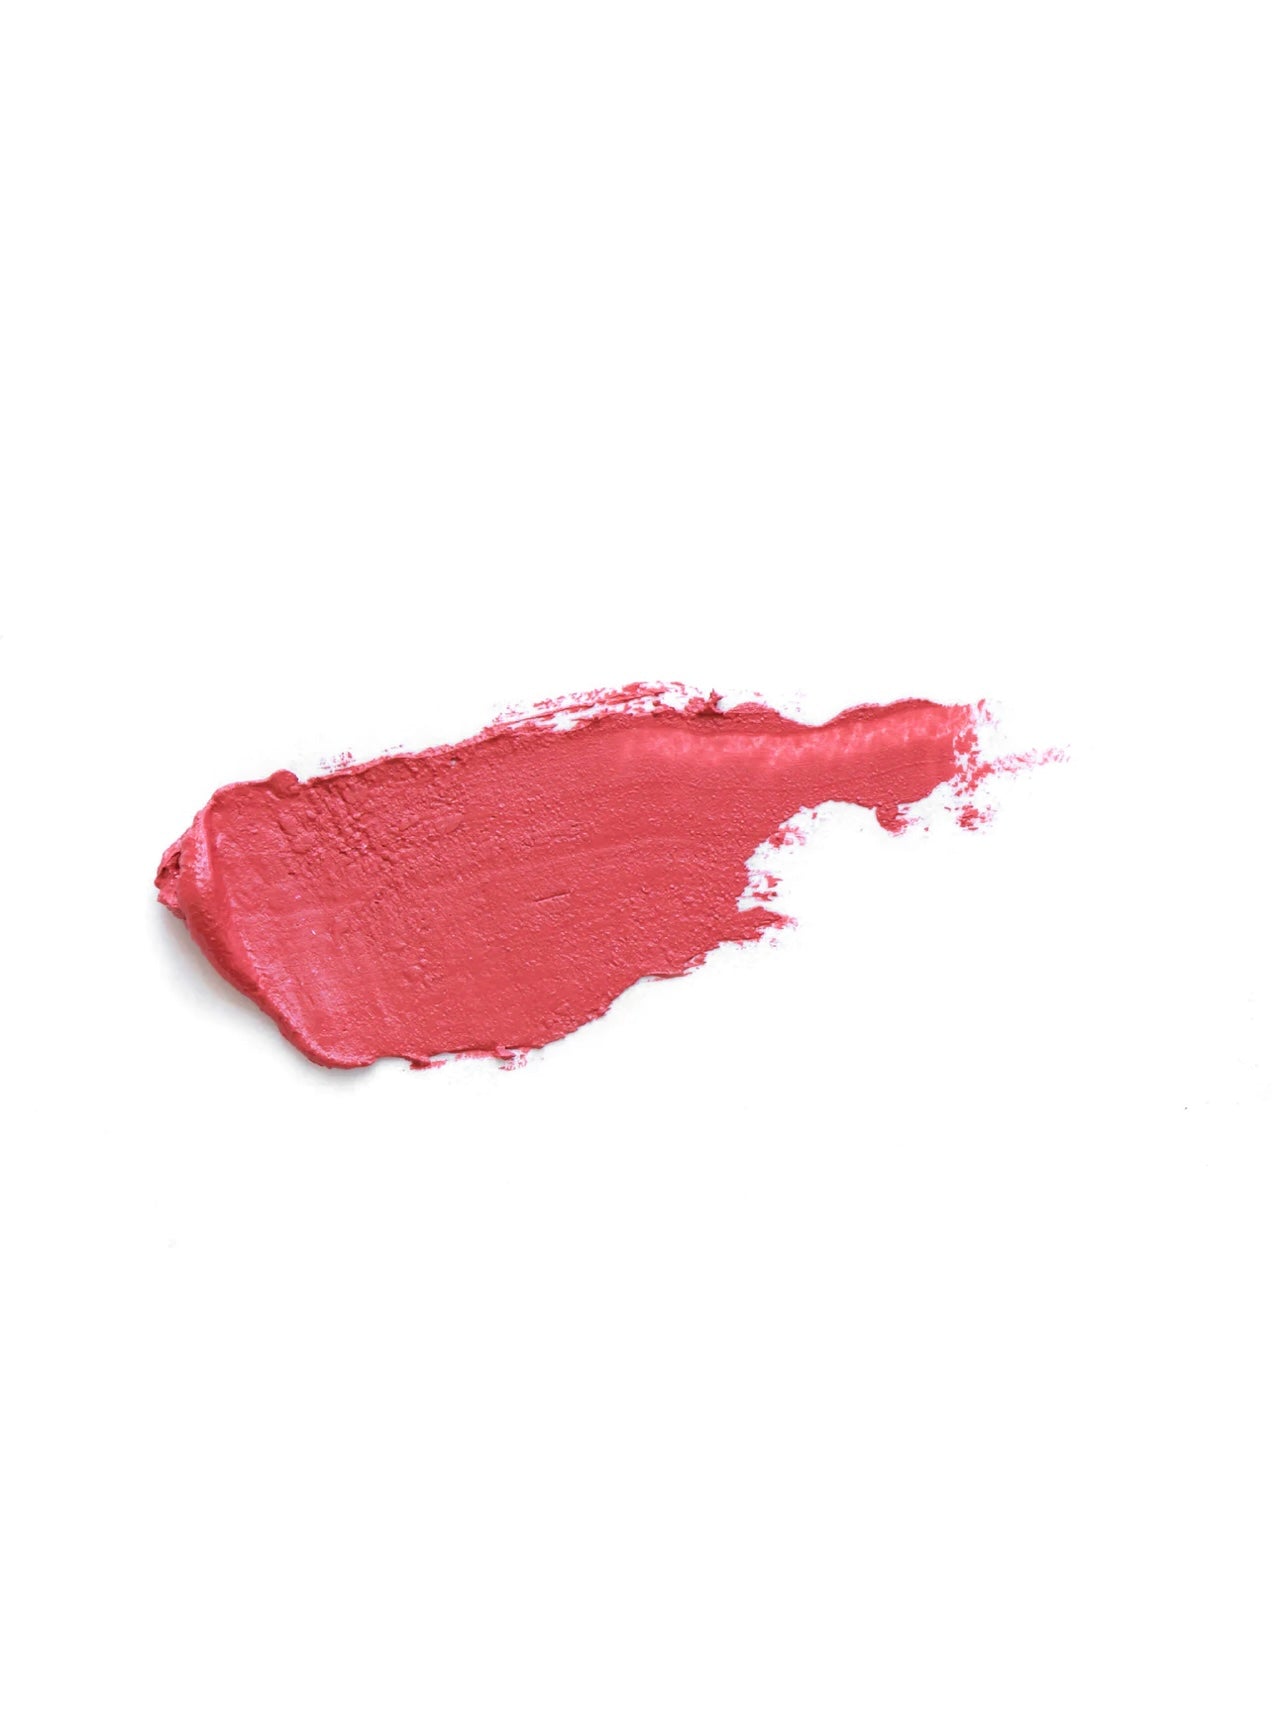 SUZY Lipsticks : Grapefruit ( Whipped Matte)